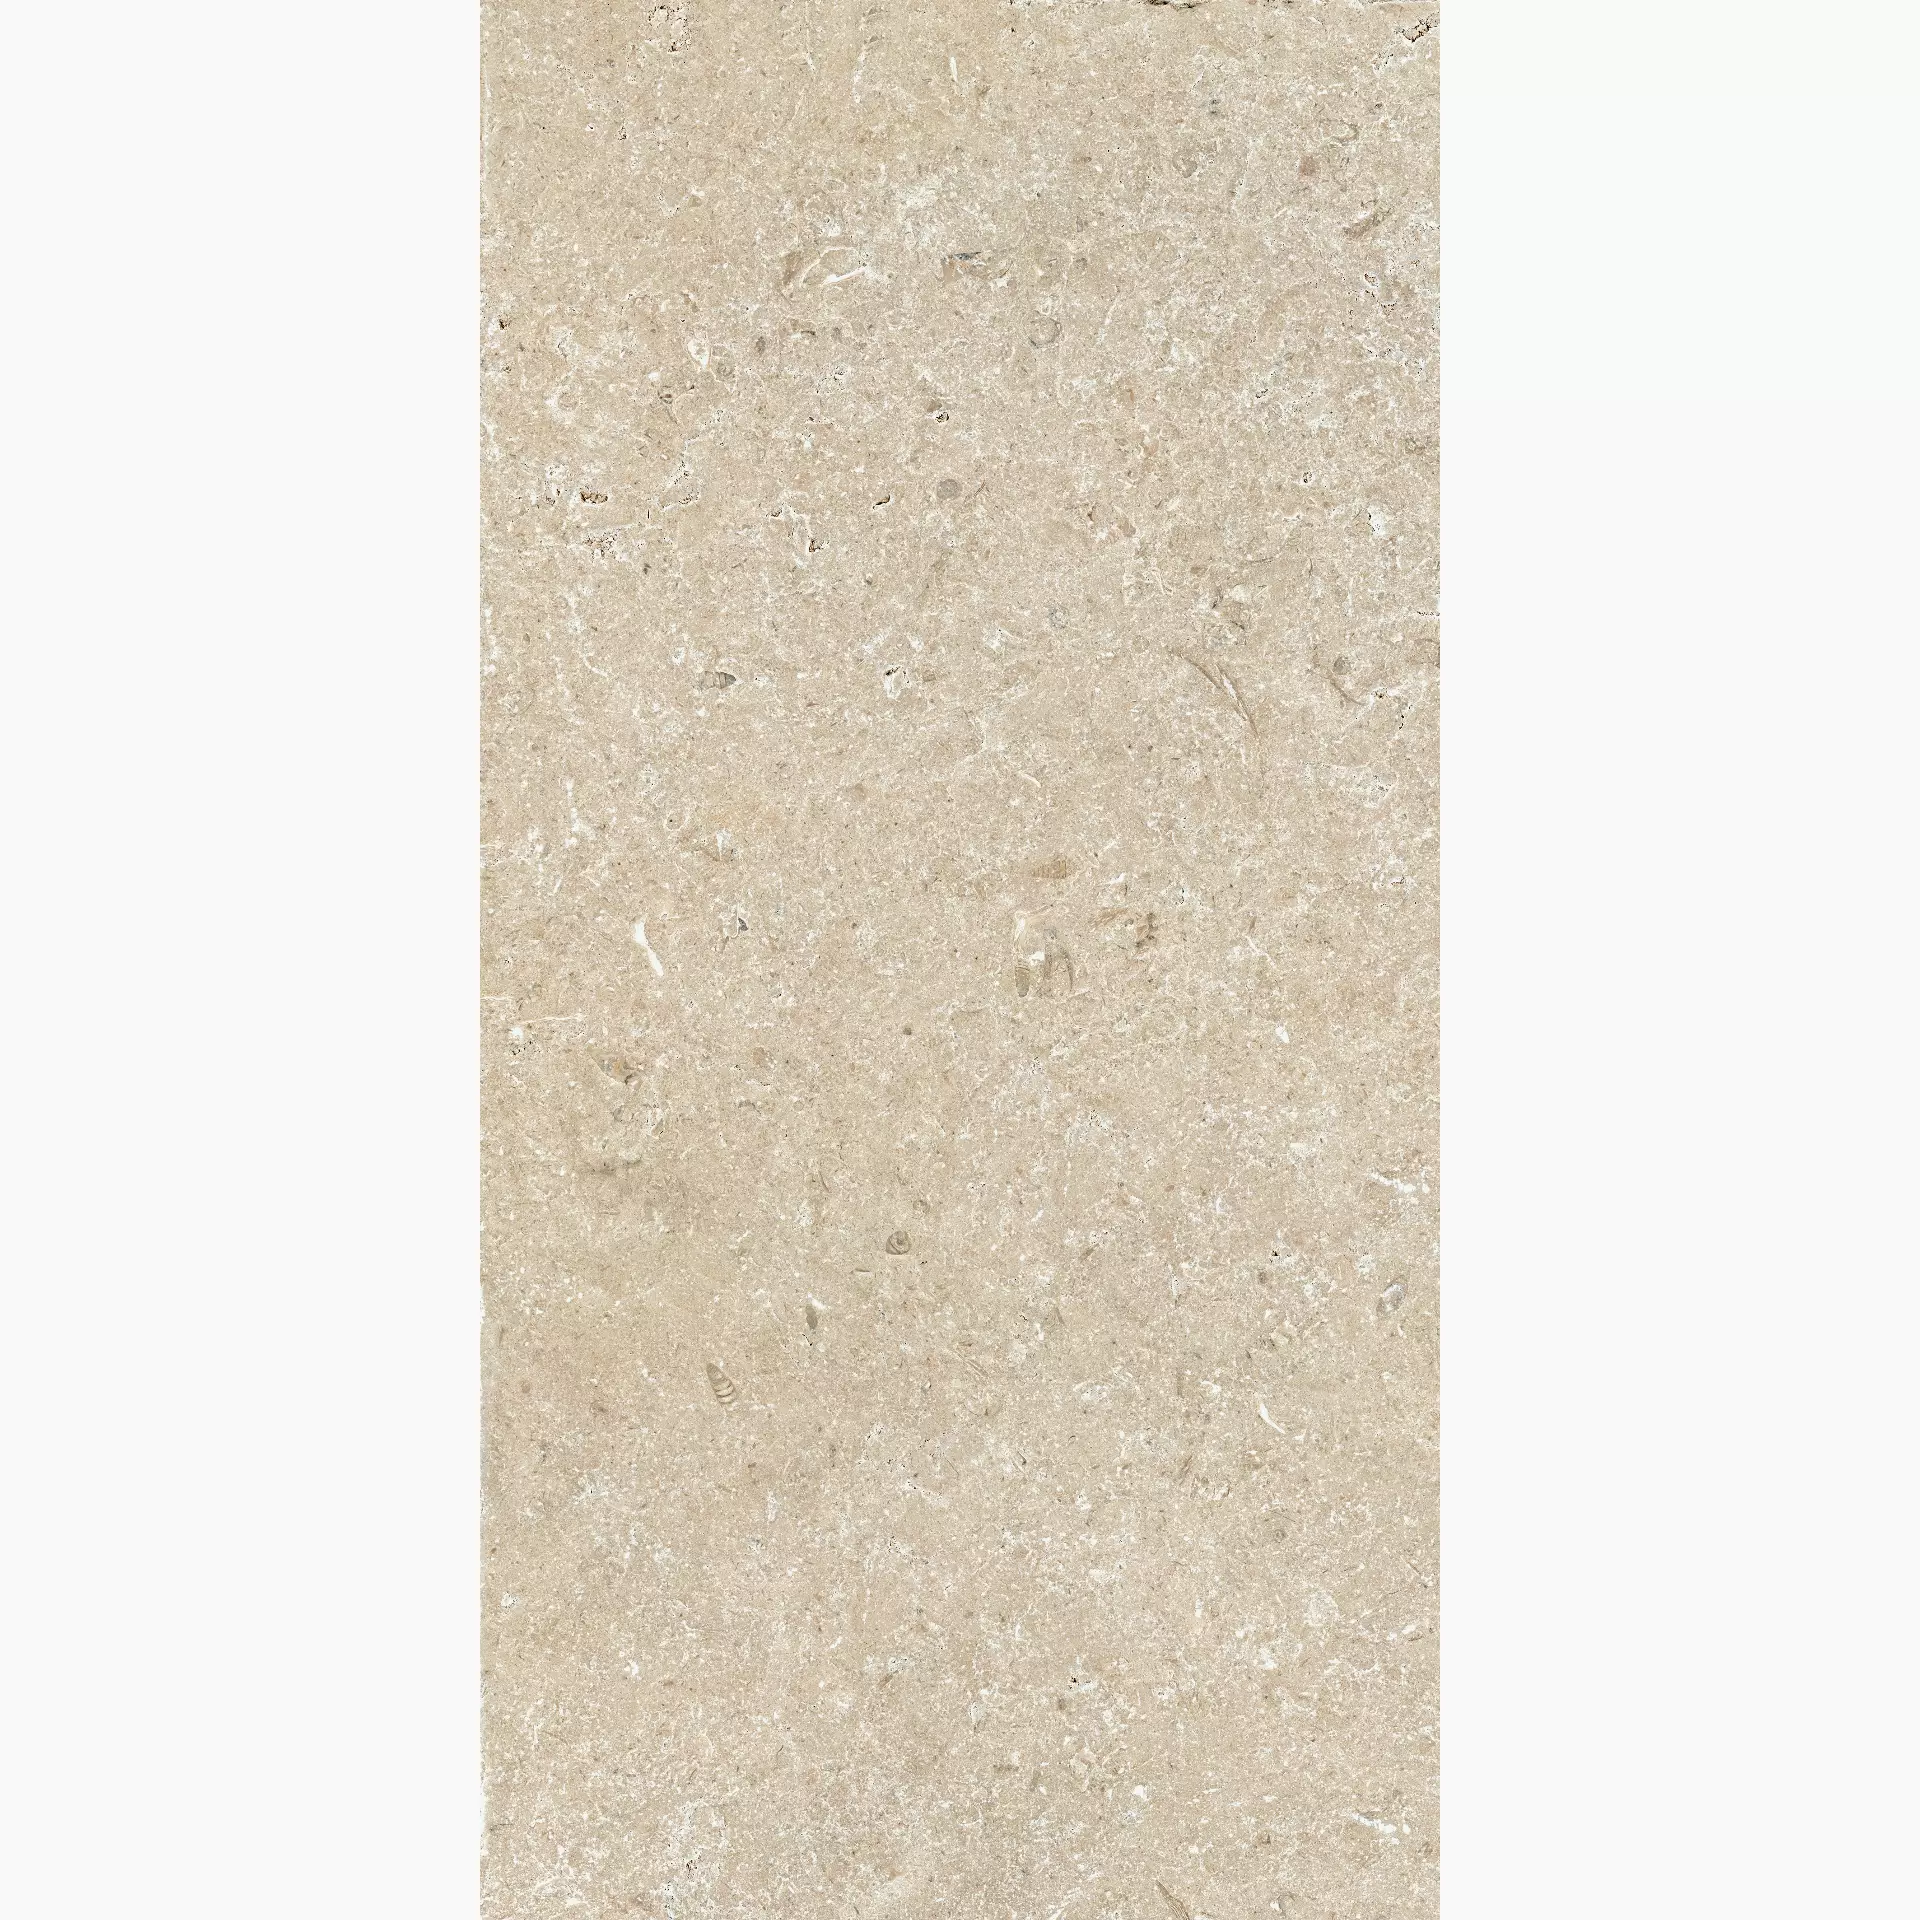 Cottodeste Secret Stone Precious Beige Naturale Protect EGXSS10 60x120cm rectified 14mm